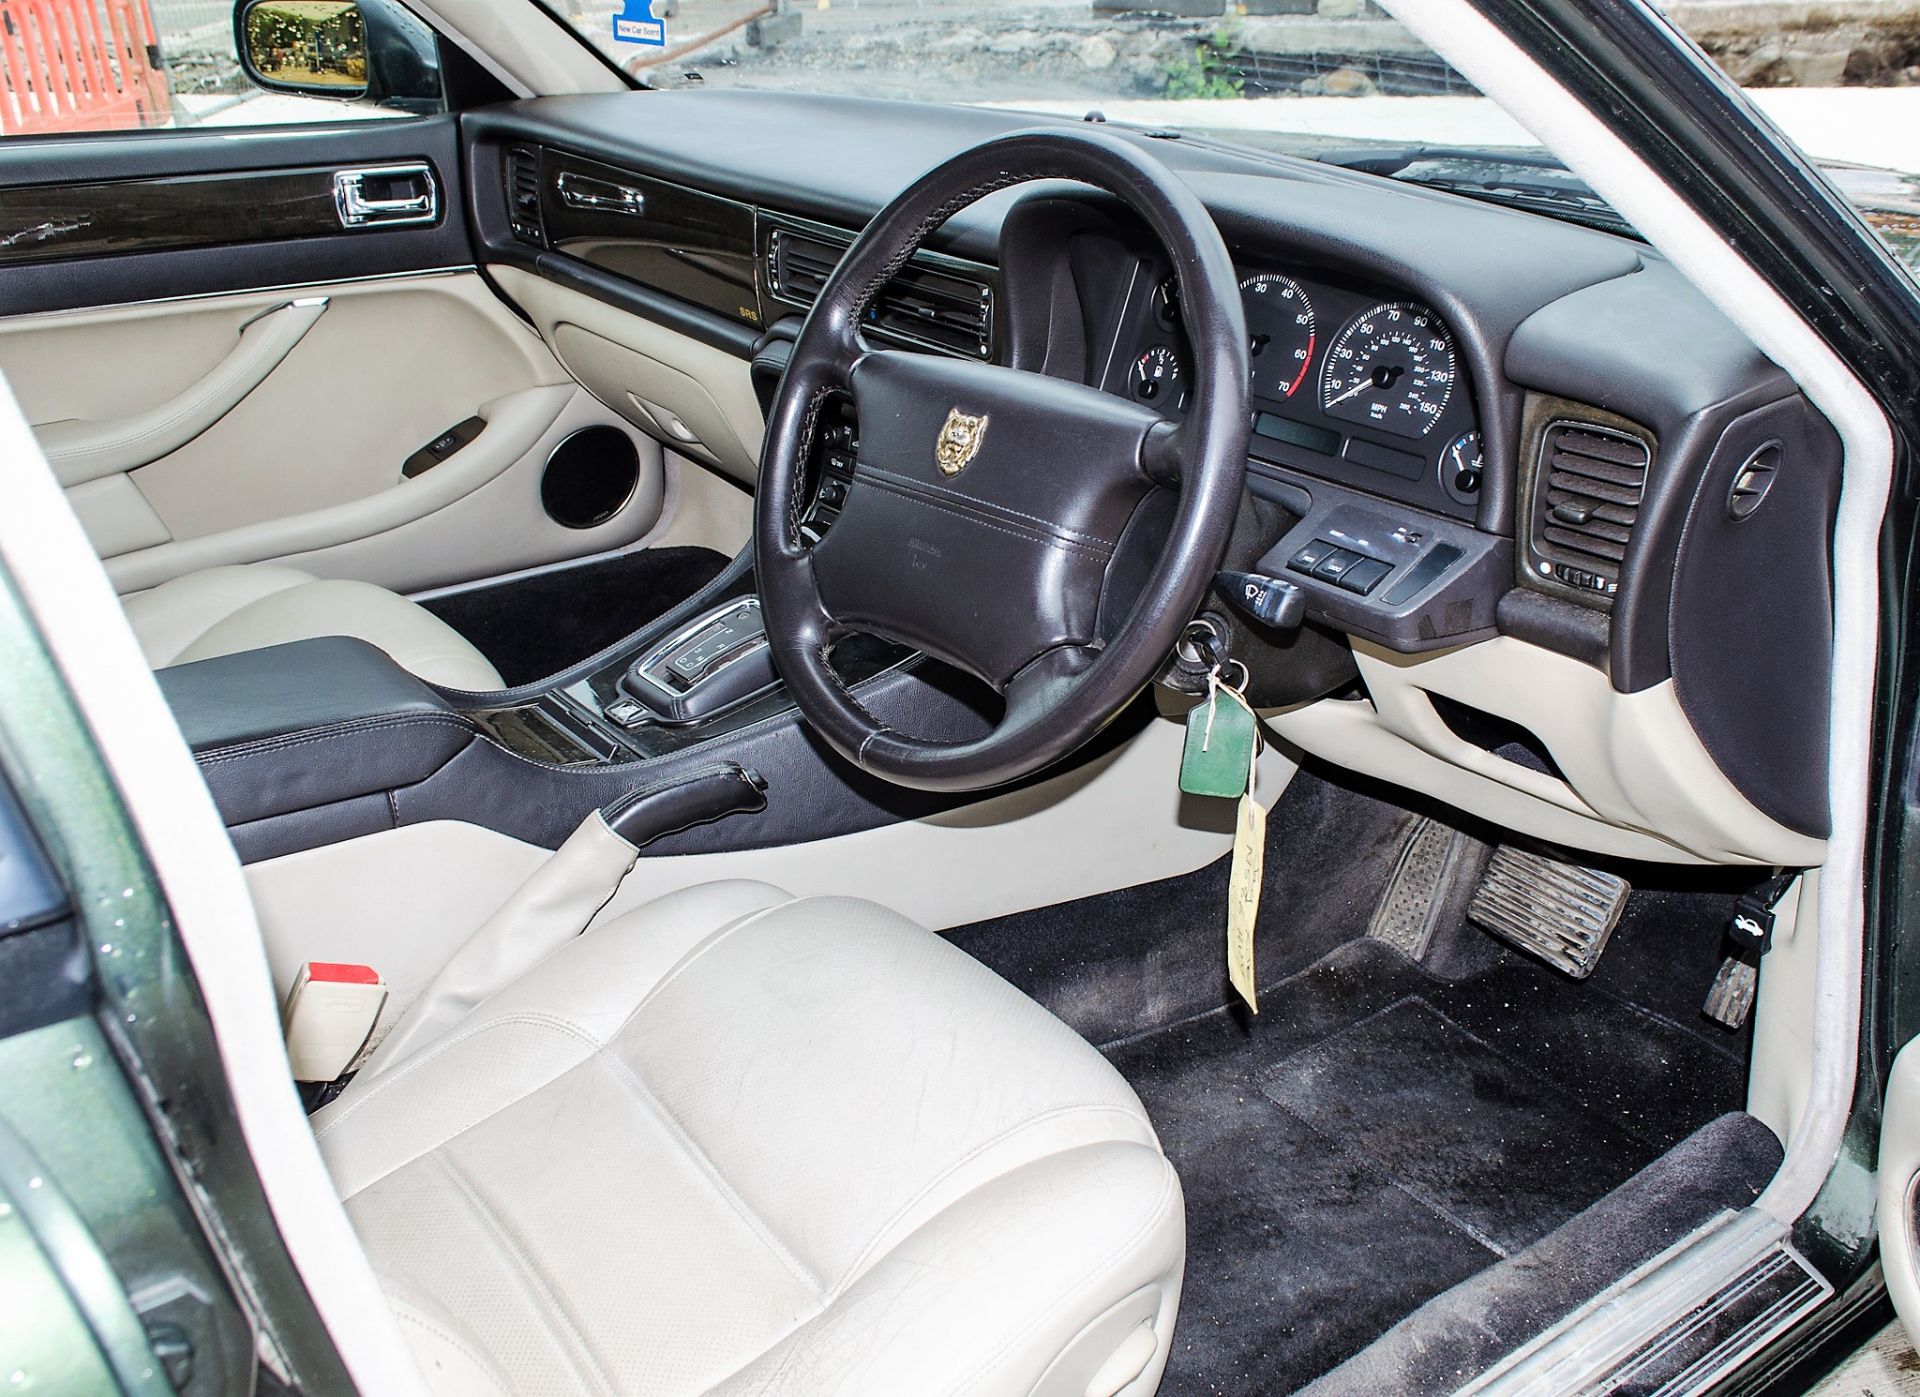 Jaguar XJ6 3.2 Sport petrol automatic 4 door saloon car Registration Number: N586 HUY Date of - Image 17 of 28